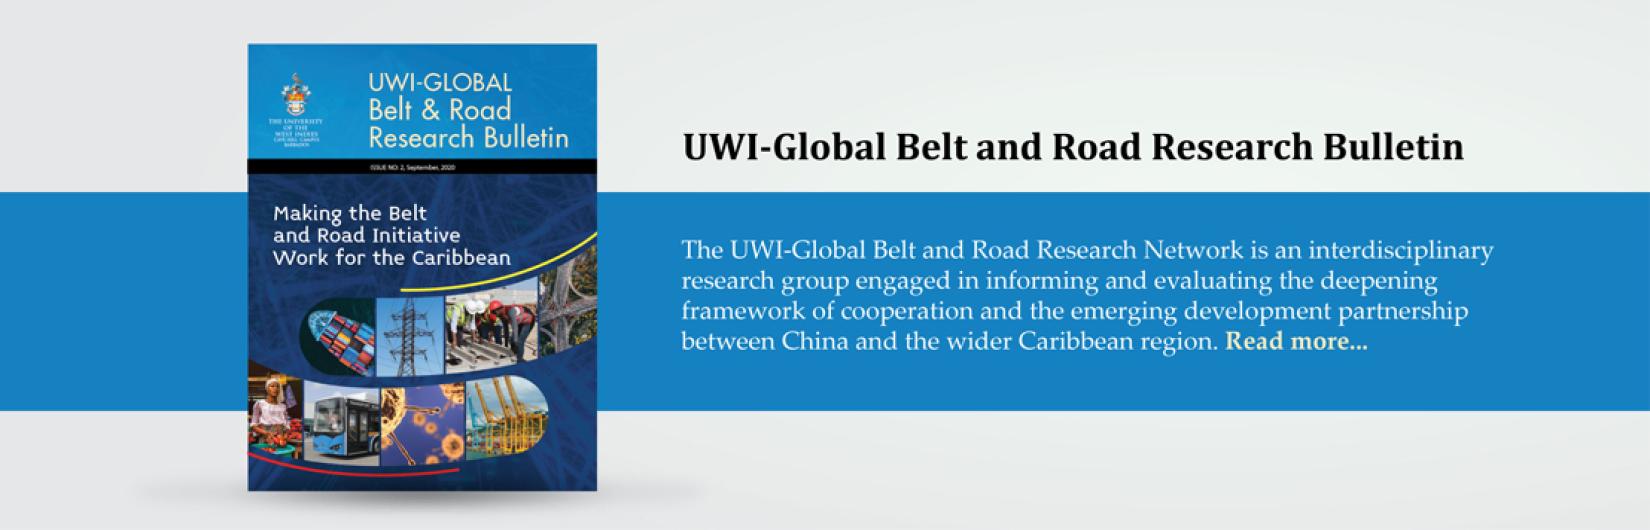 UWI-Global Belt and Road Research Bulletin